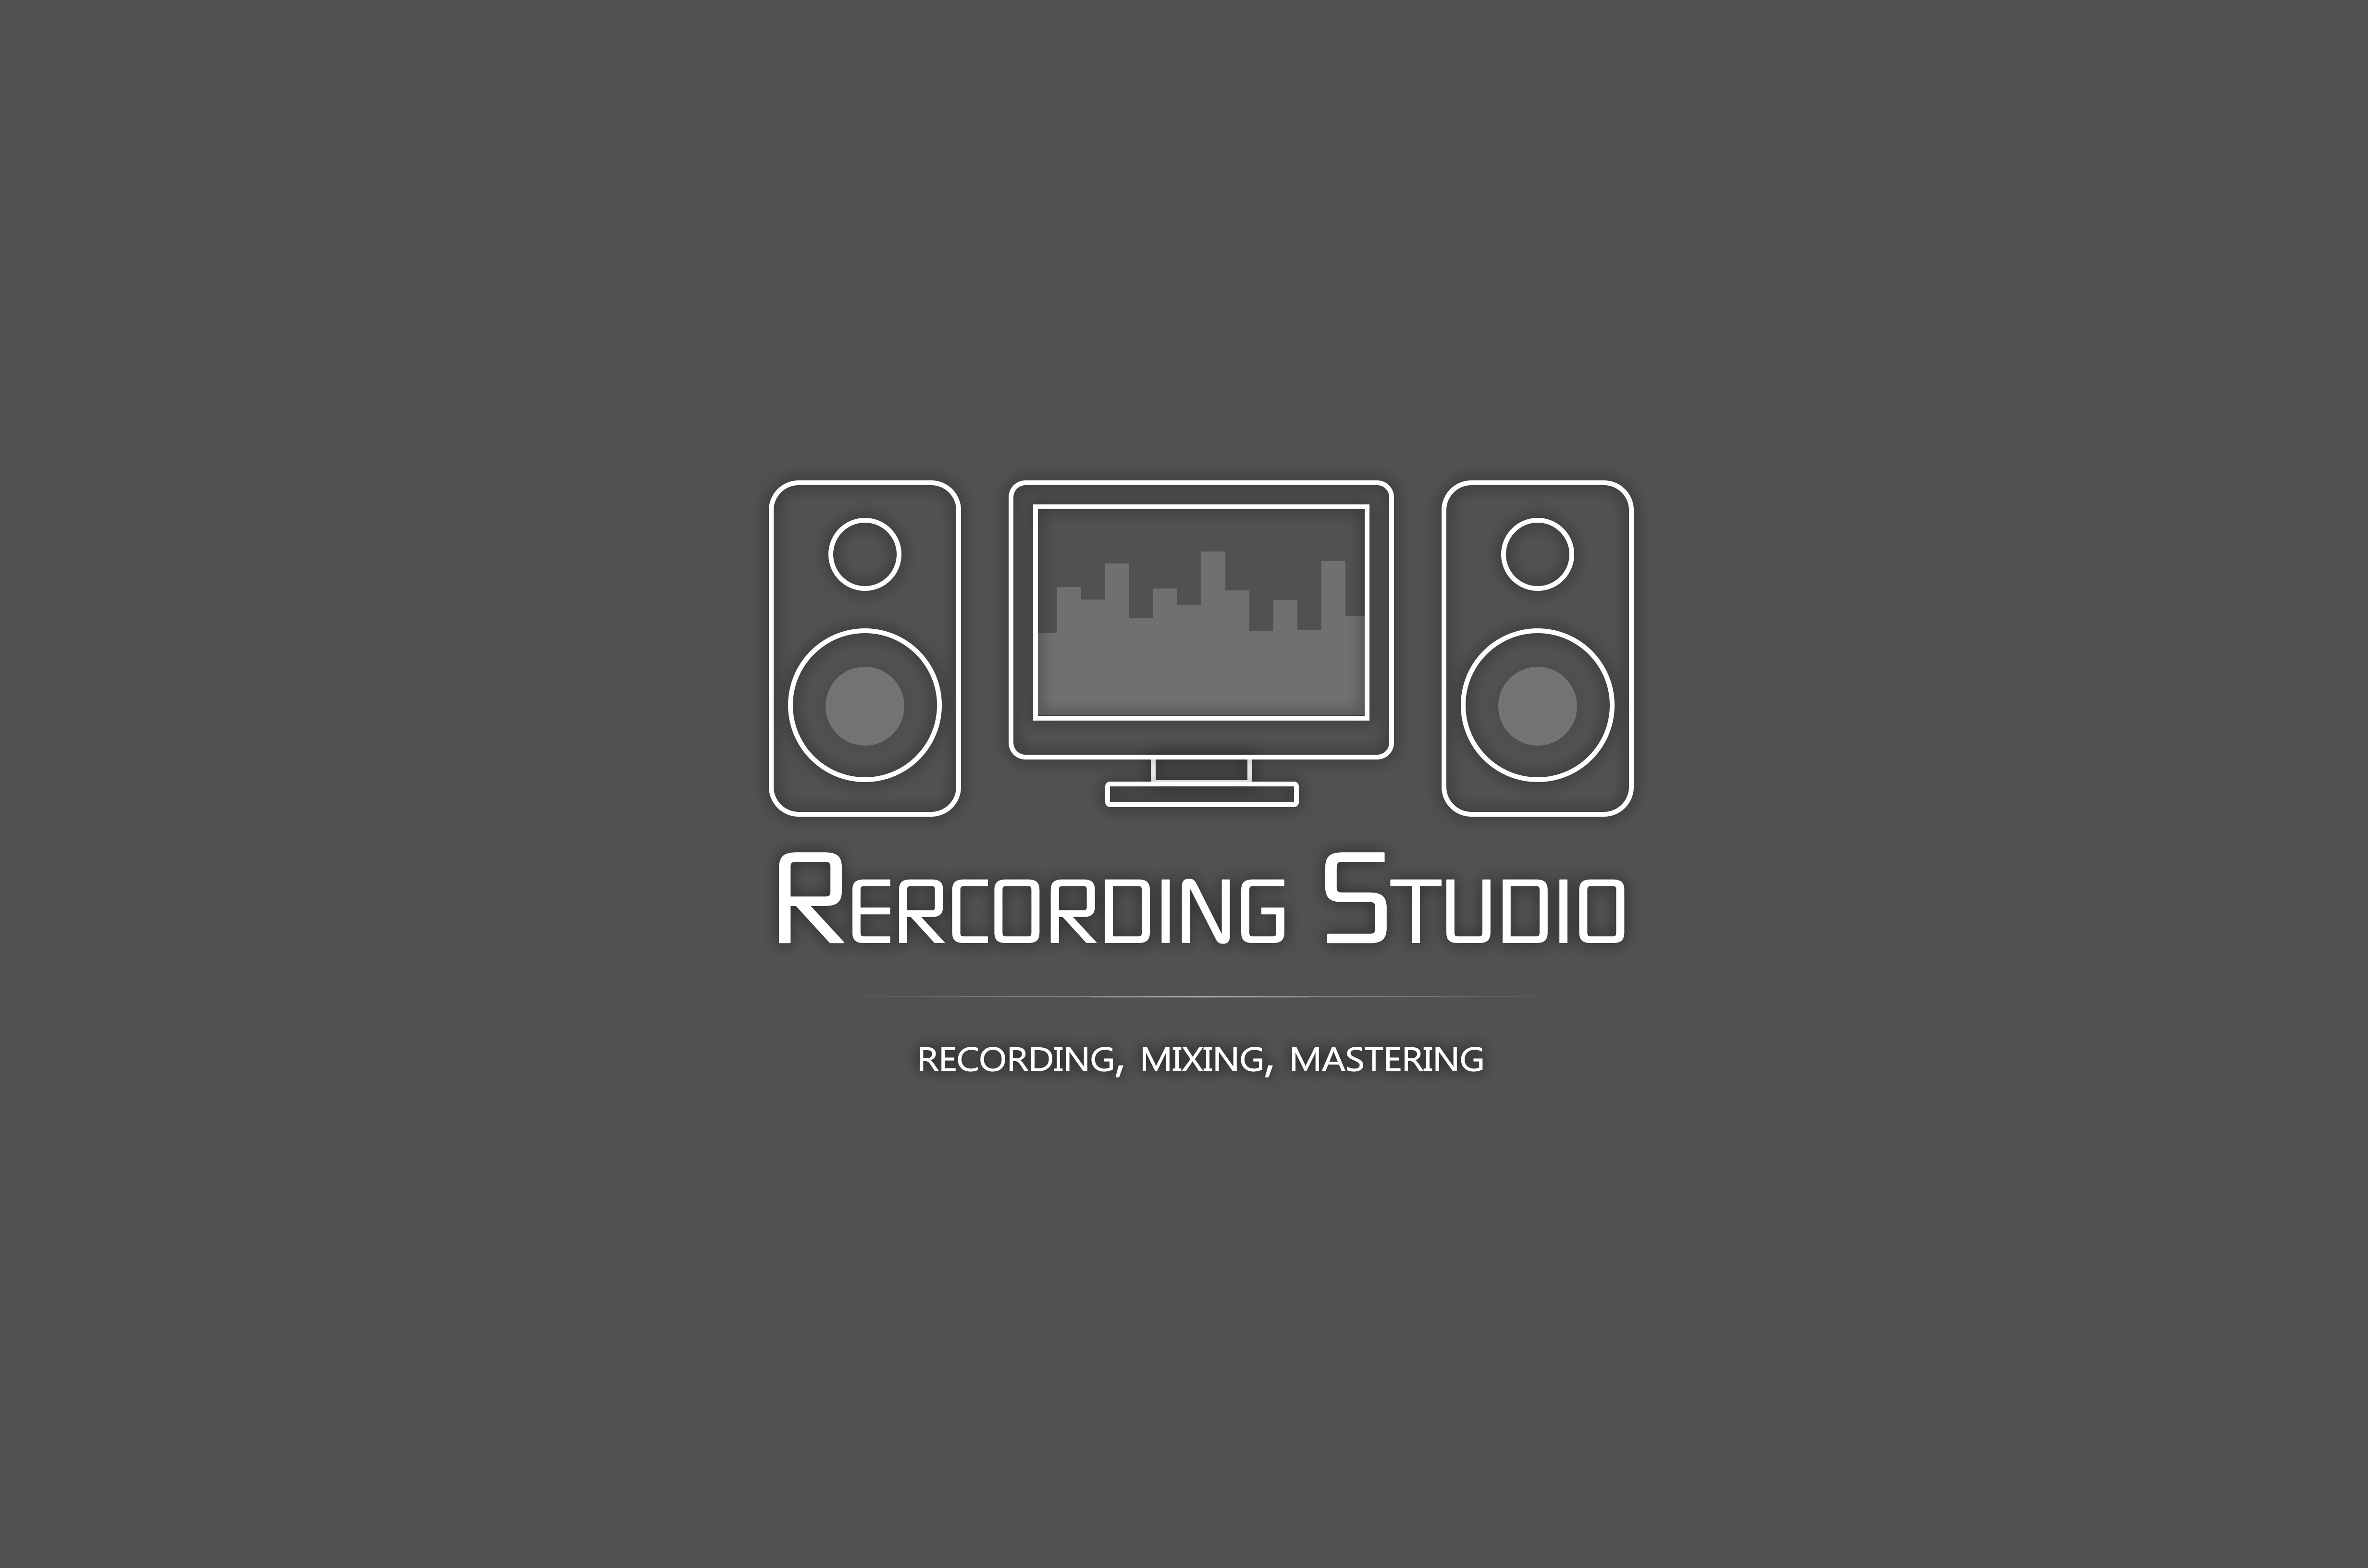 Txt studio. Студия звукозаписи лого. Эмблема студии звукозаписи. Логотип звукозаписывающей студии. Логотип музыкальной студии звукозаписи.